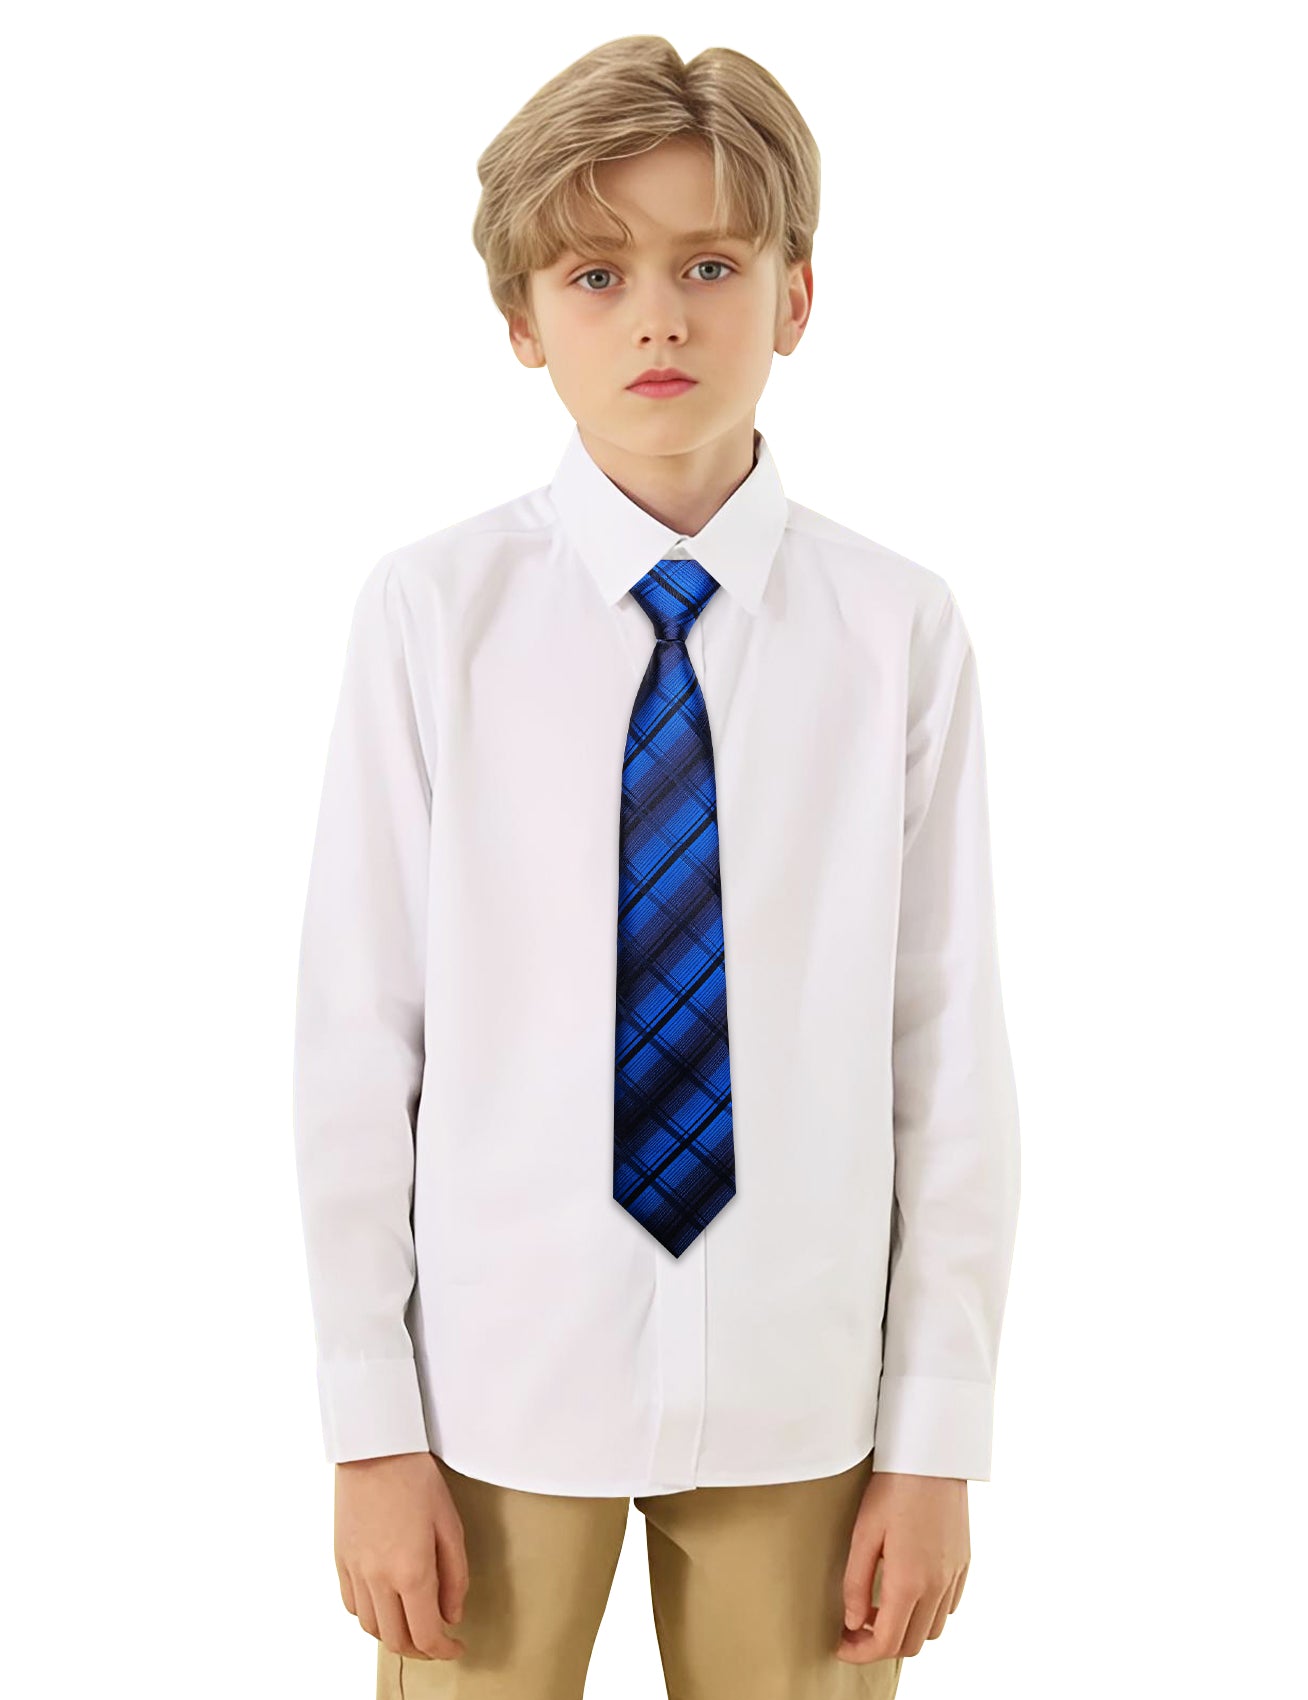 Barry.wang Kids Tie Blue Black Plaid Silk Tie Hanky Set for Children